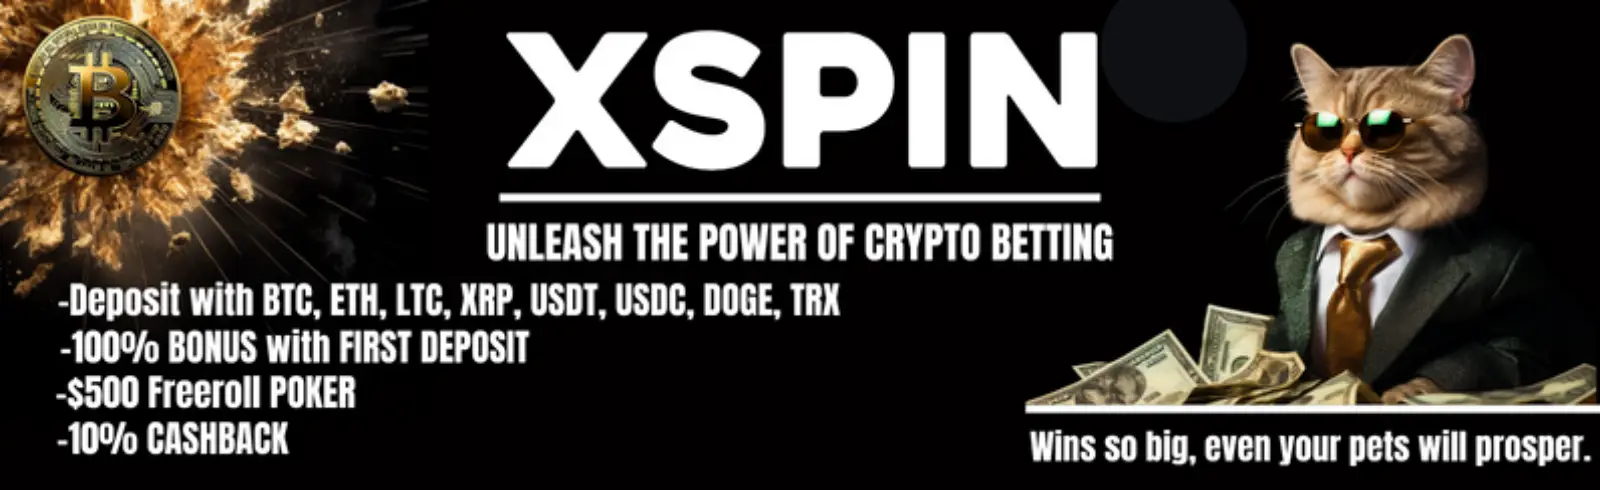 XSPIN_Online_Casino